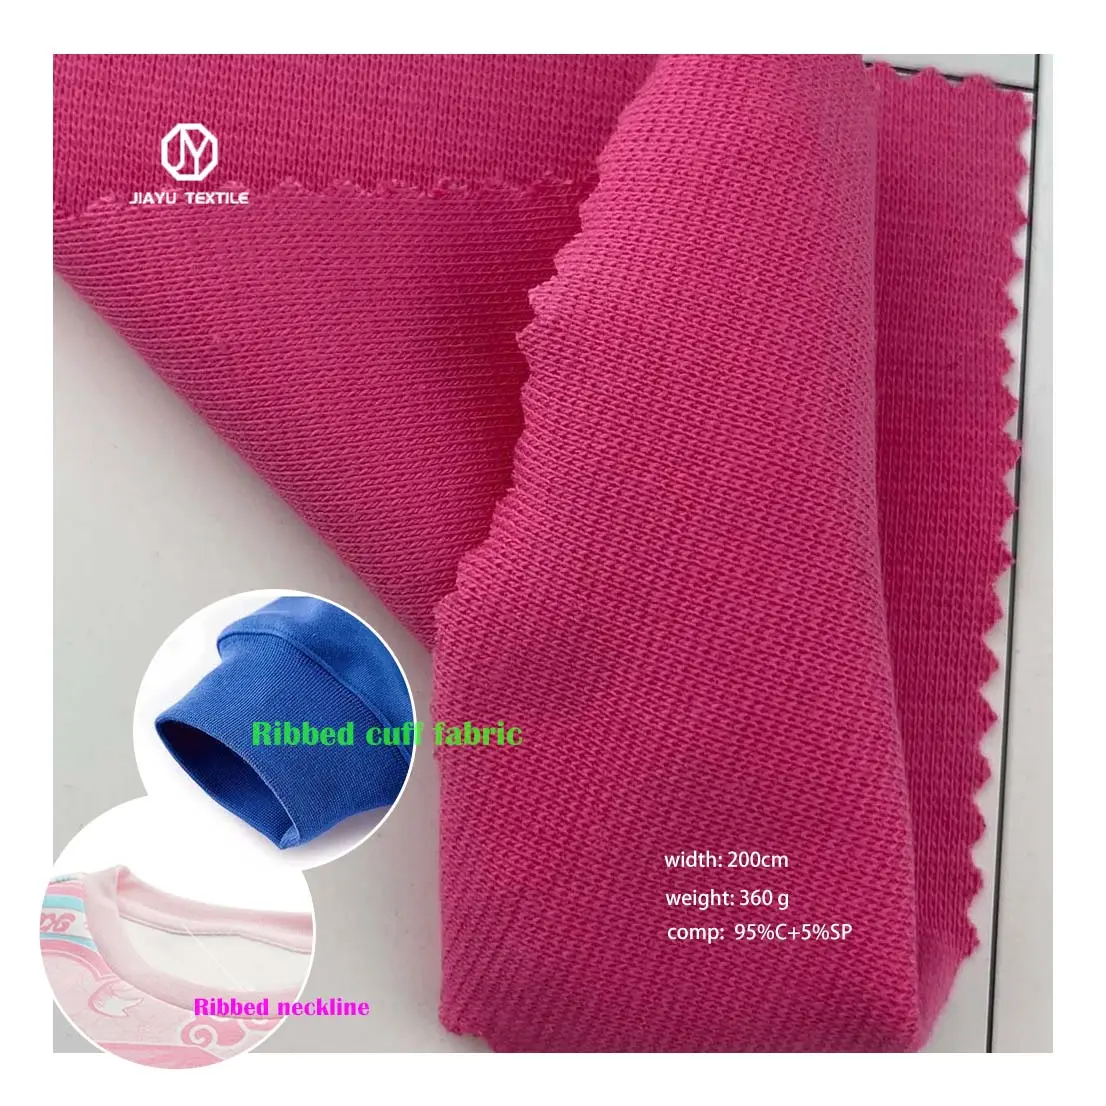 High tenacity 1*1rib knitted cuff fabric High elastic 95% cotton 5% spandex knitted garment neckline fabric material